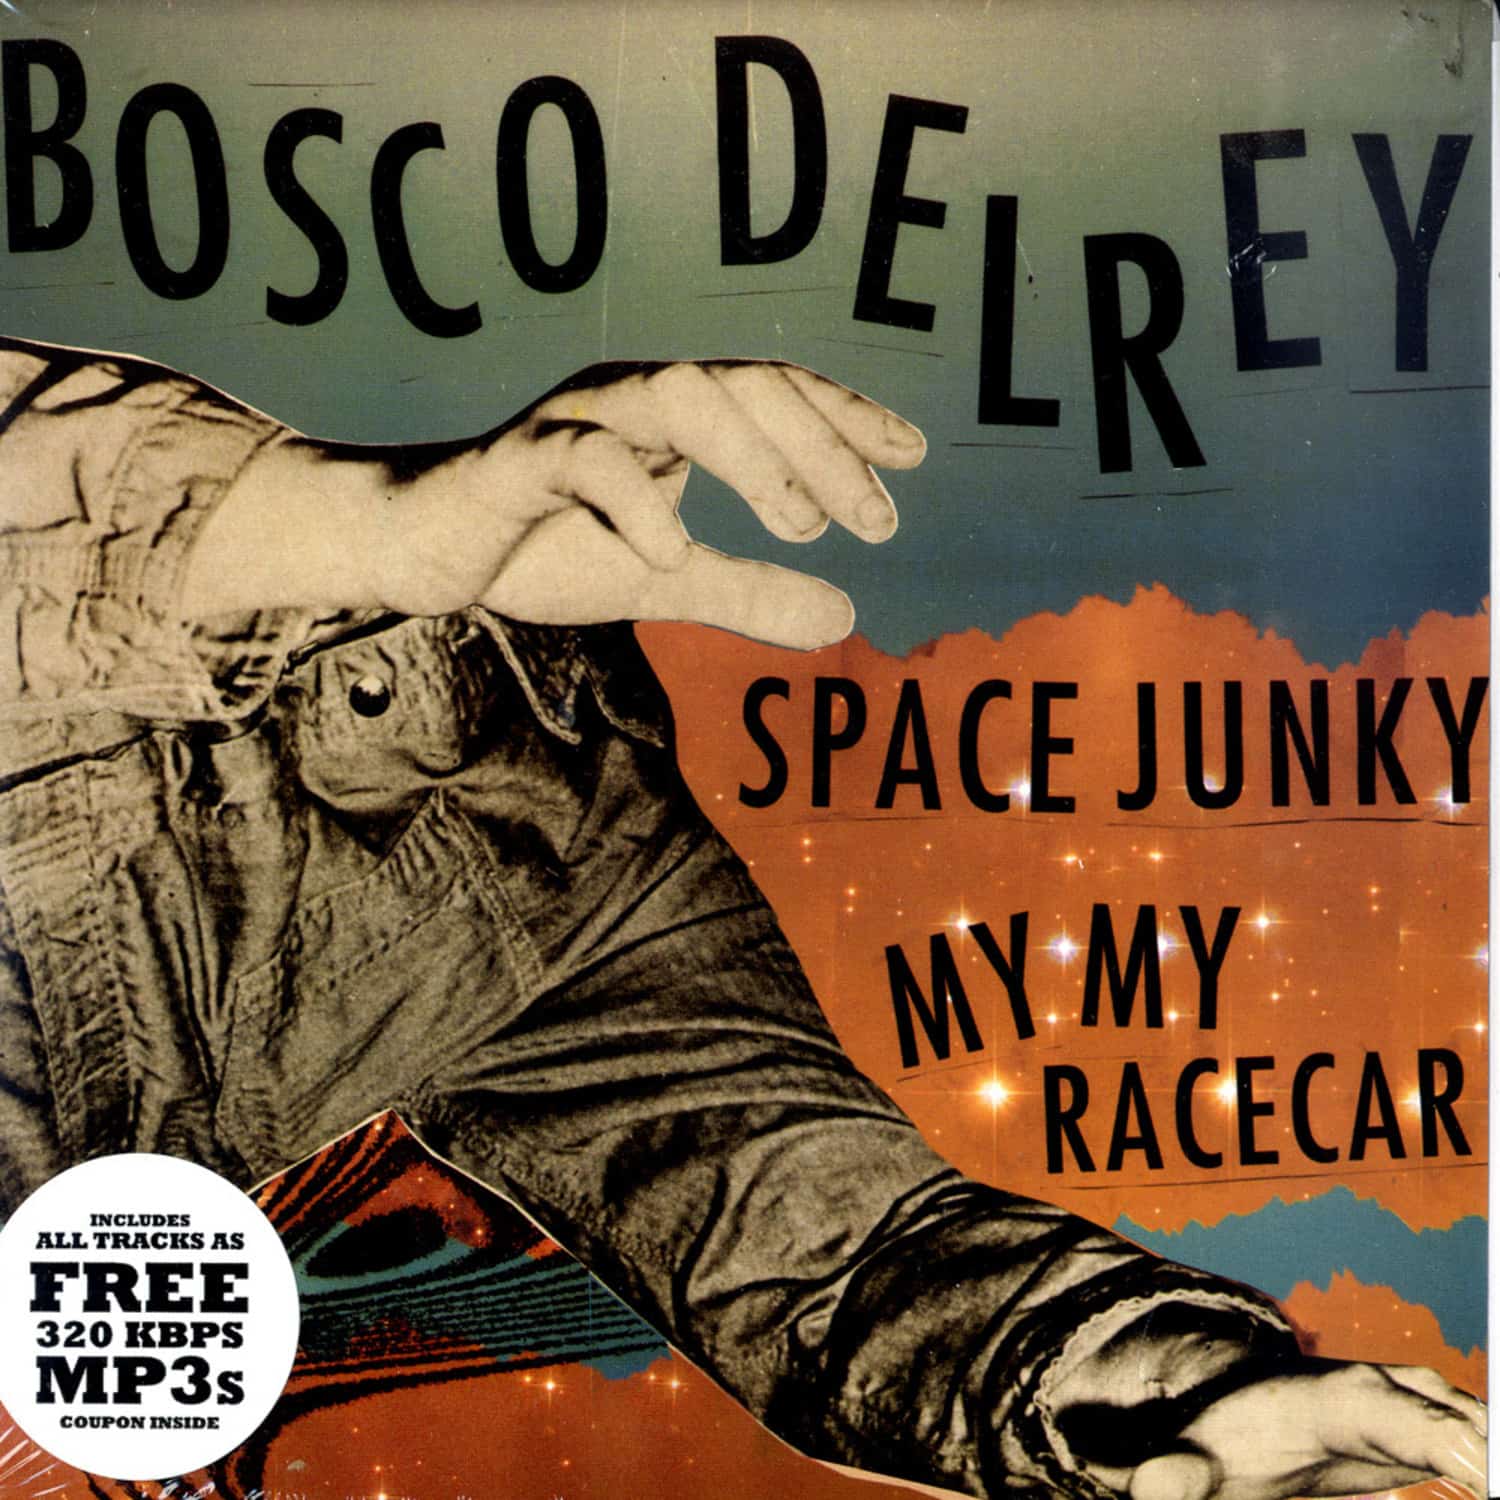 Bosco Delrey - SPACE JUNKY / MY MY RACECAR 